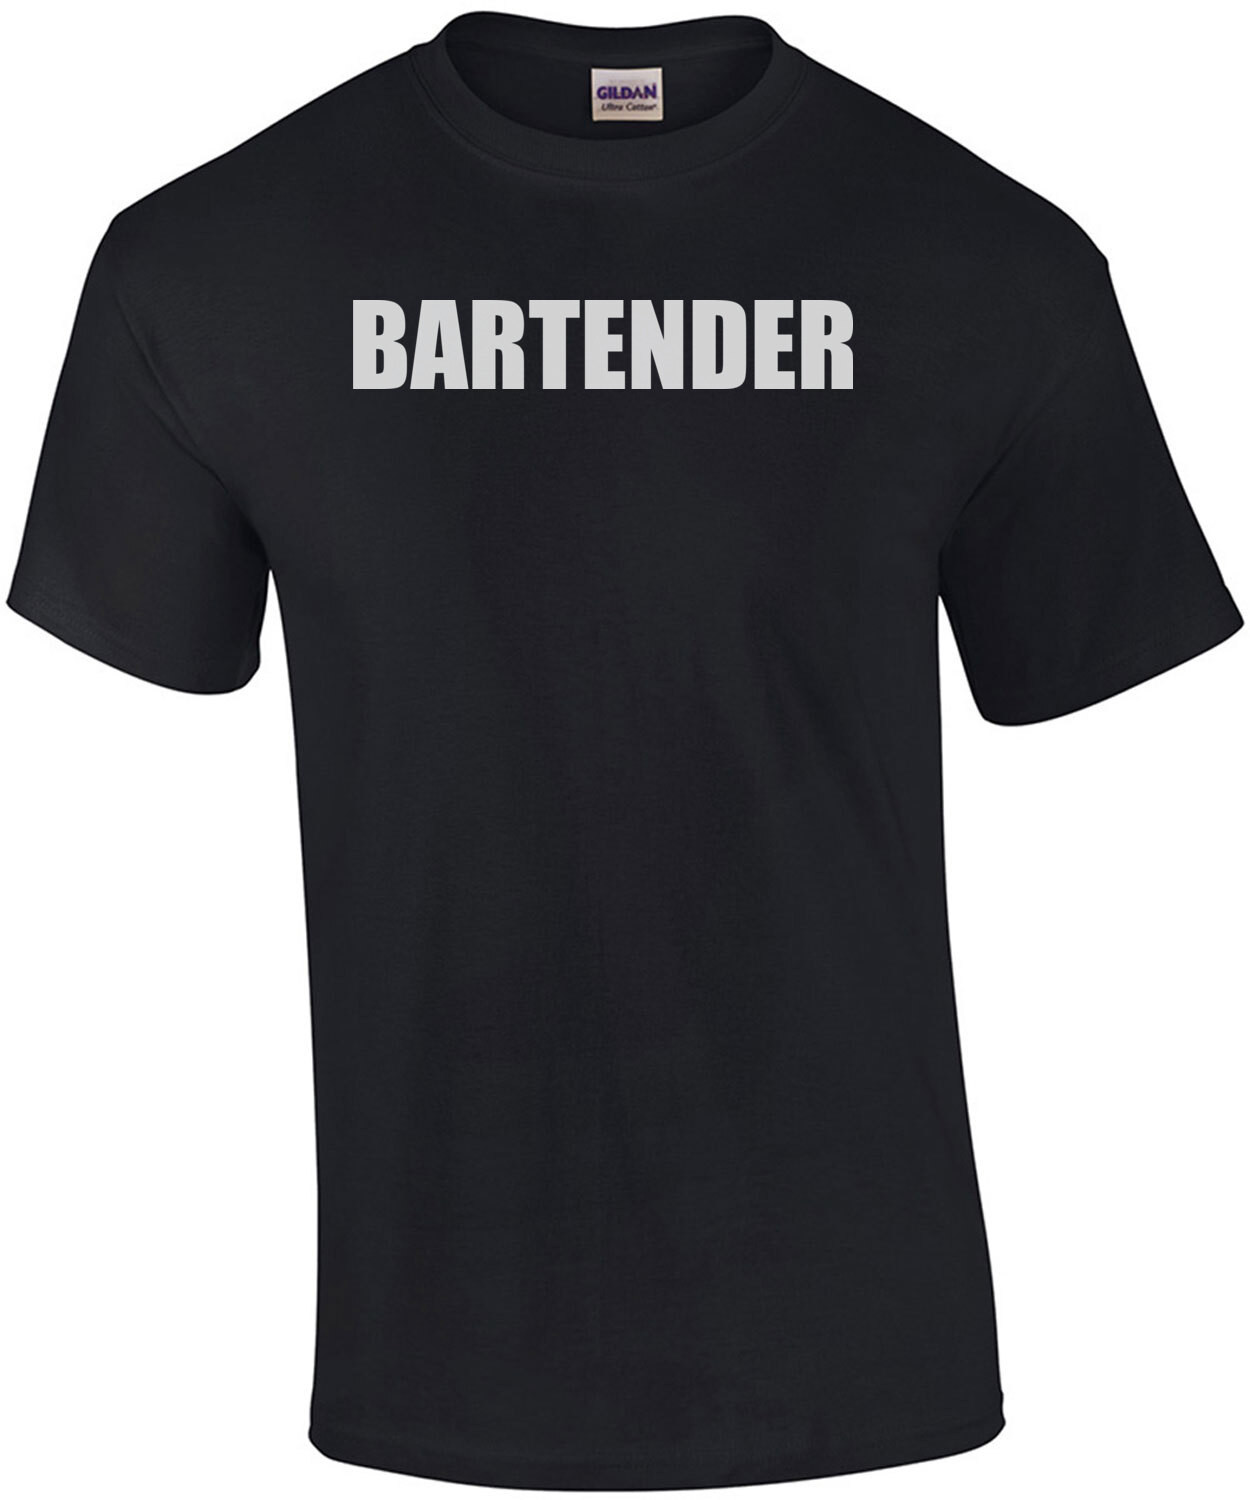 Bartender (White Text) T-Shirt